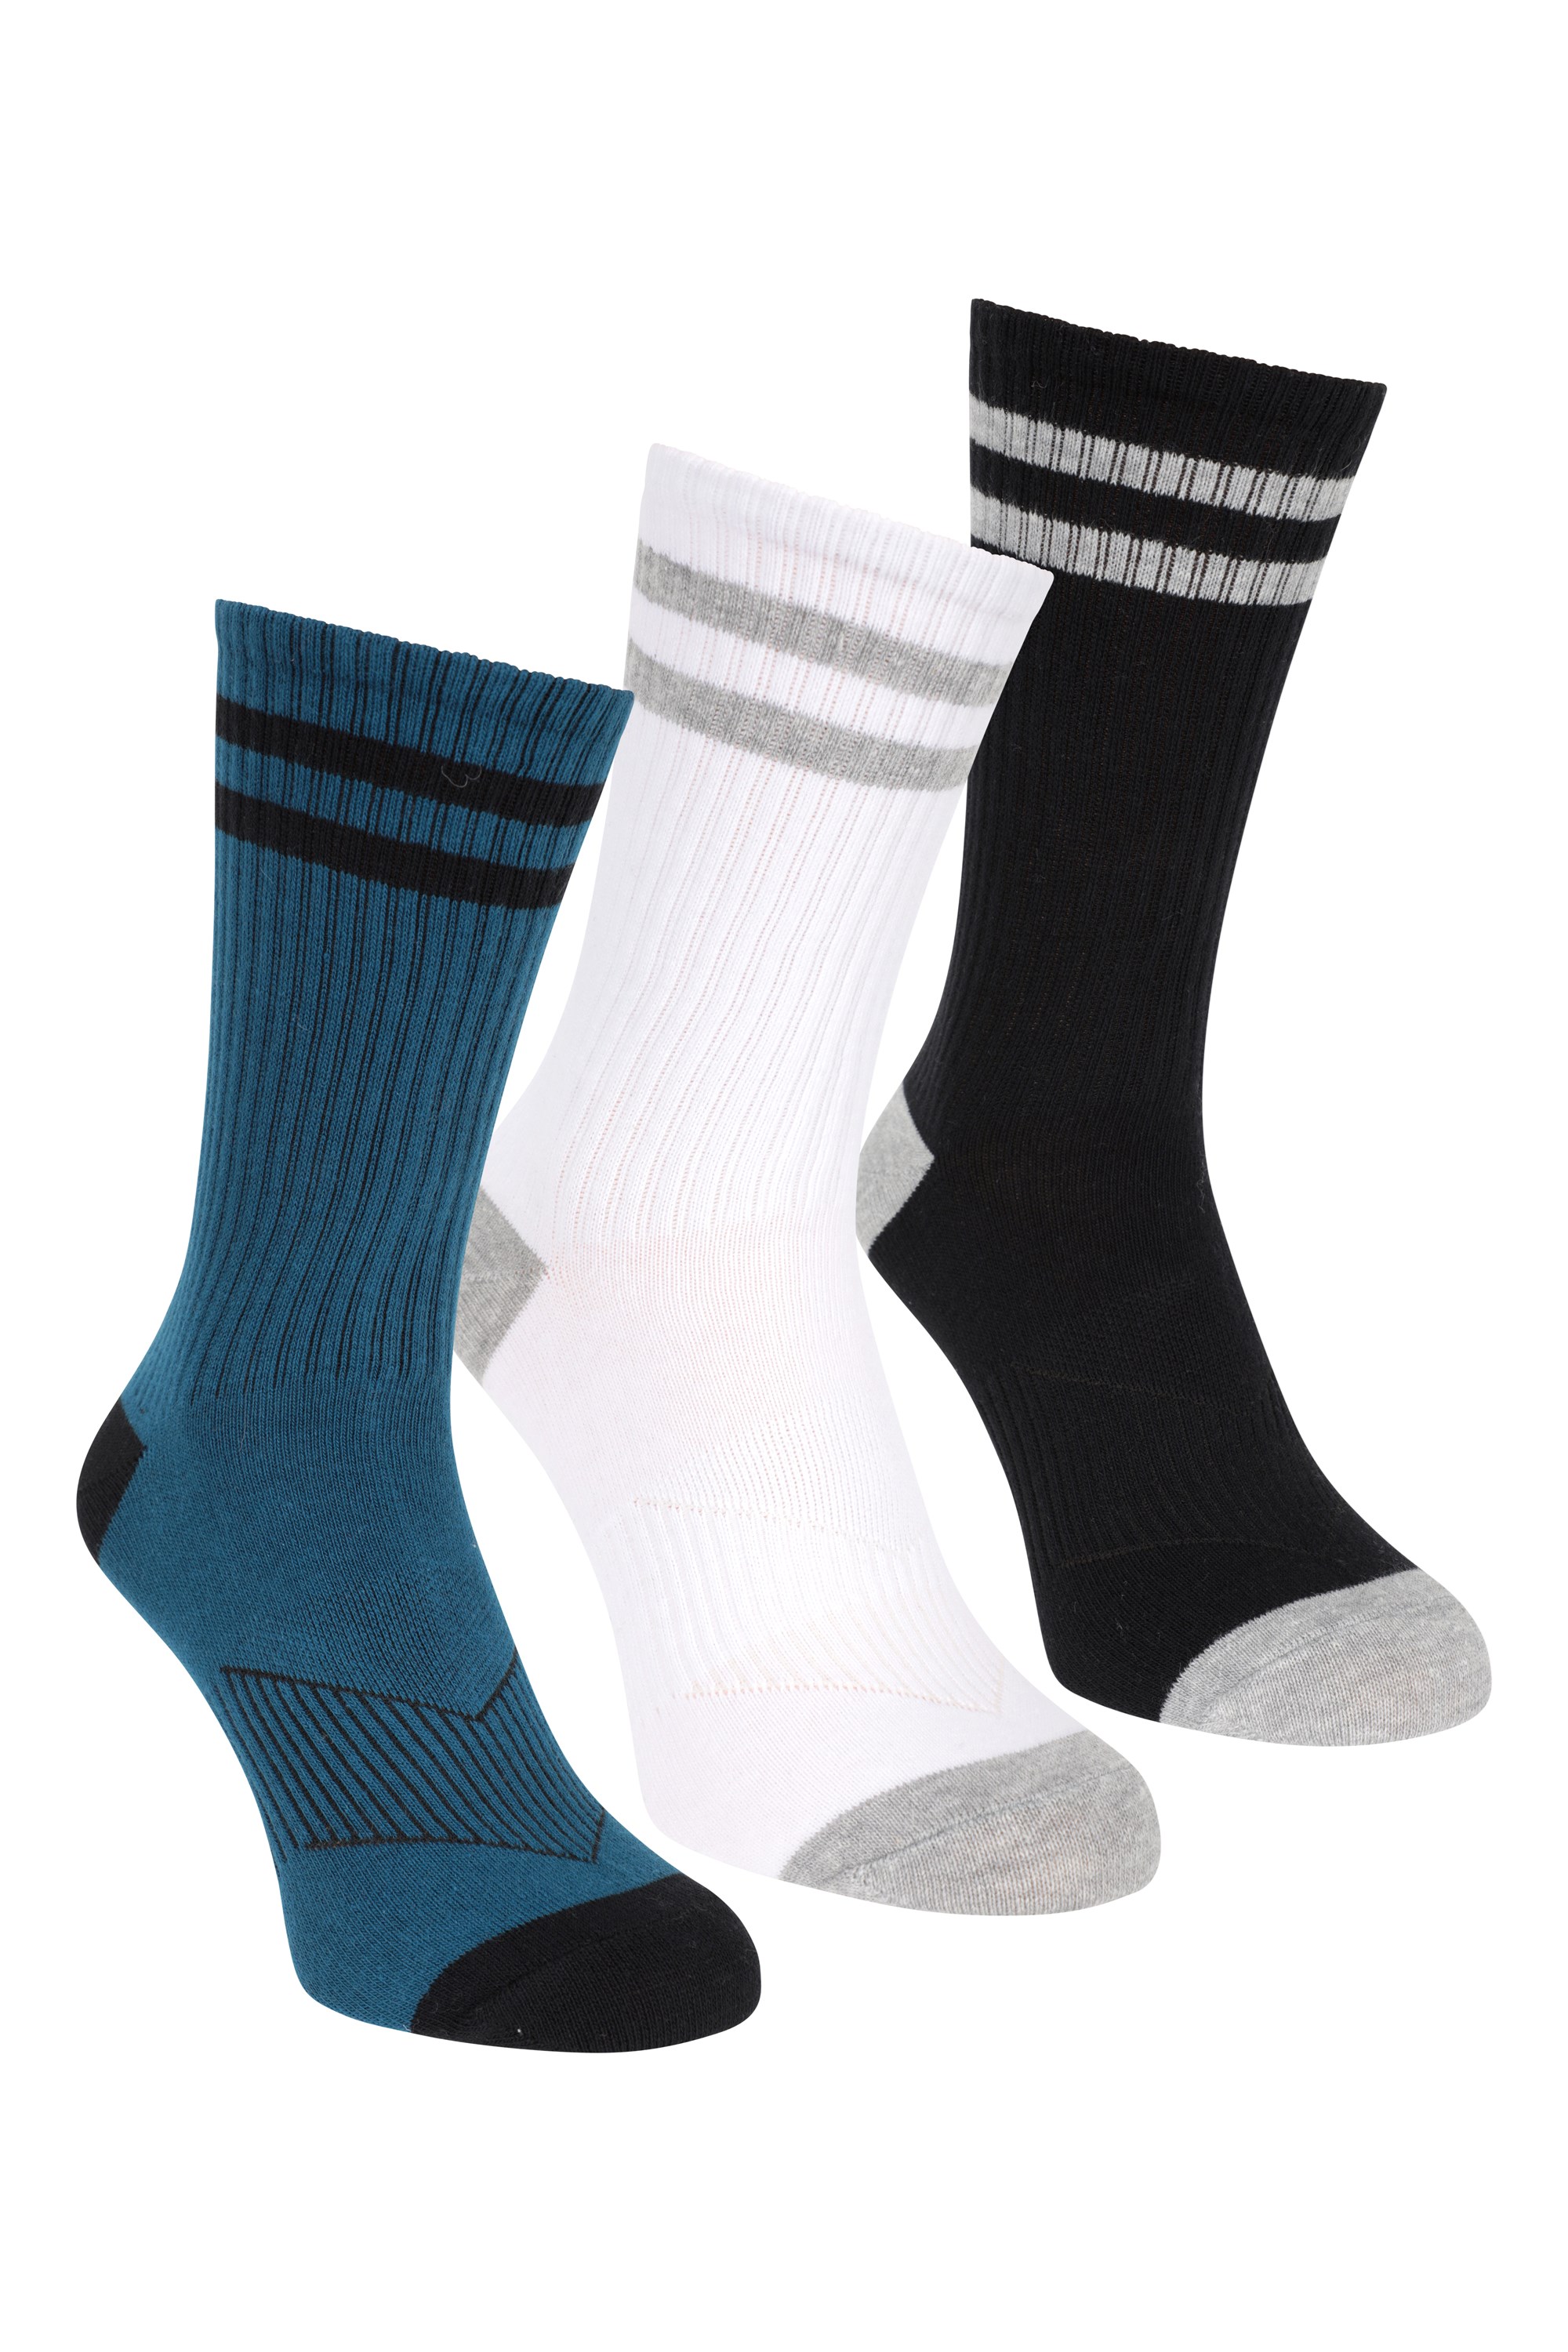 IsoCool Calf Height Socks - Teal